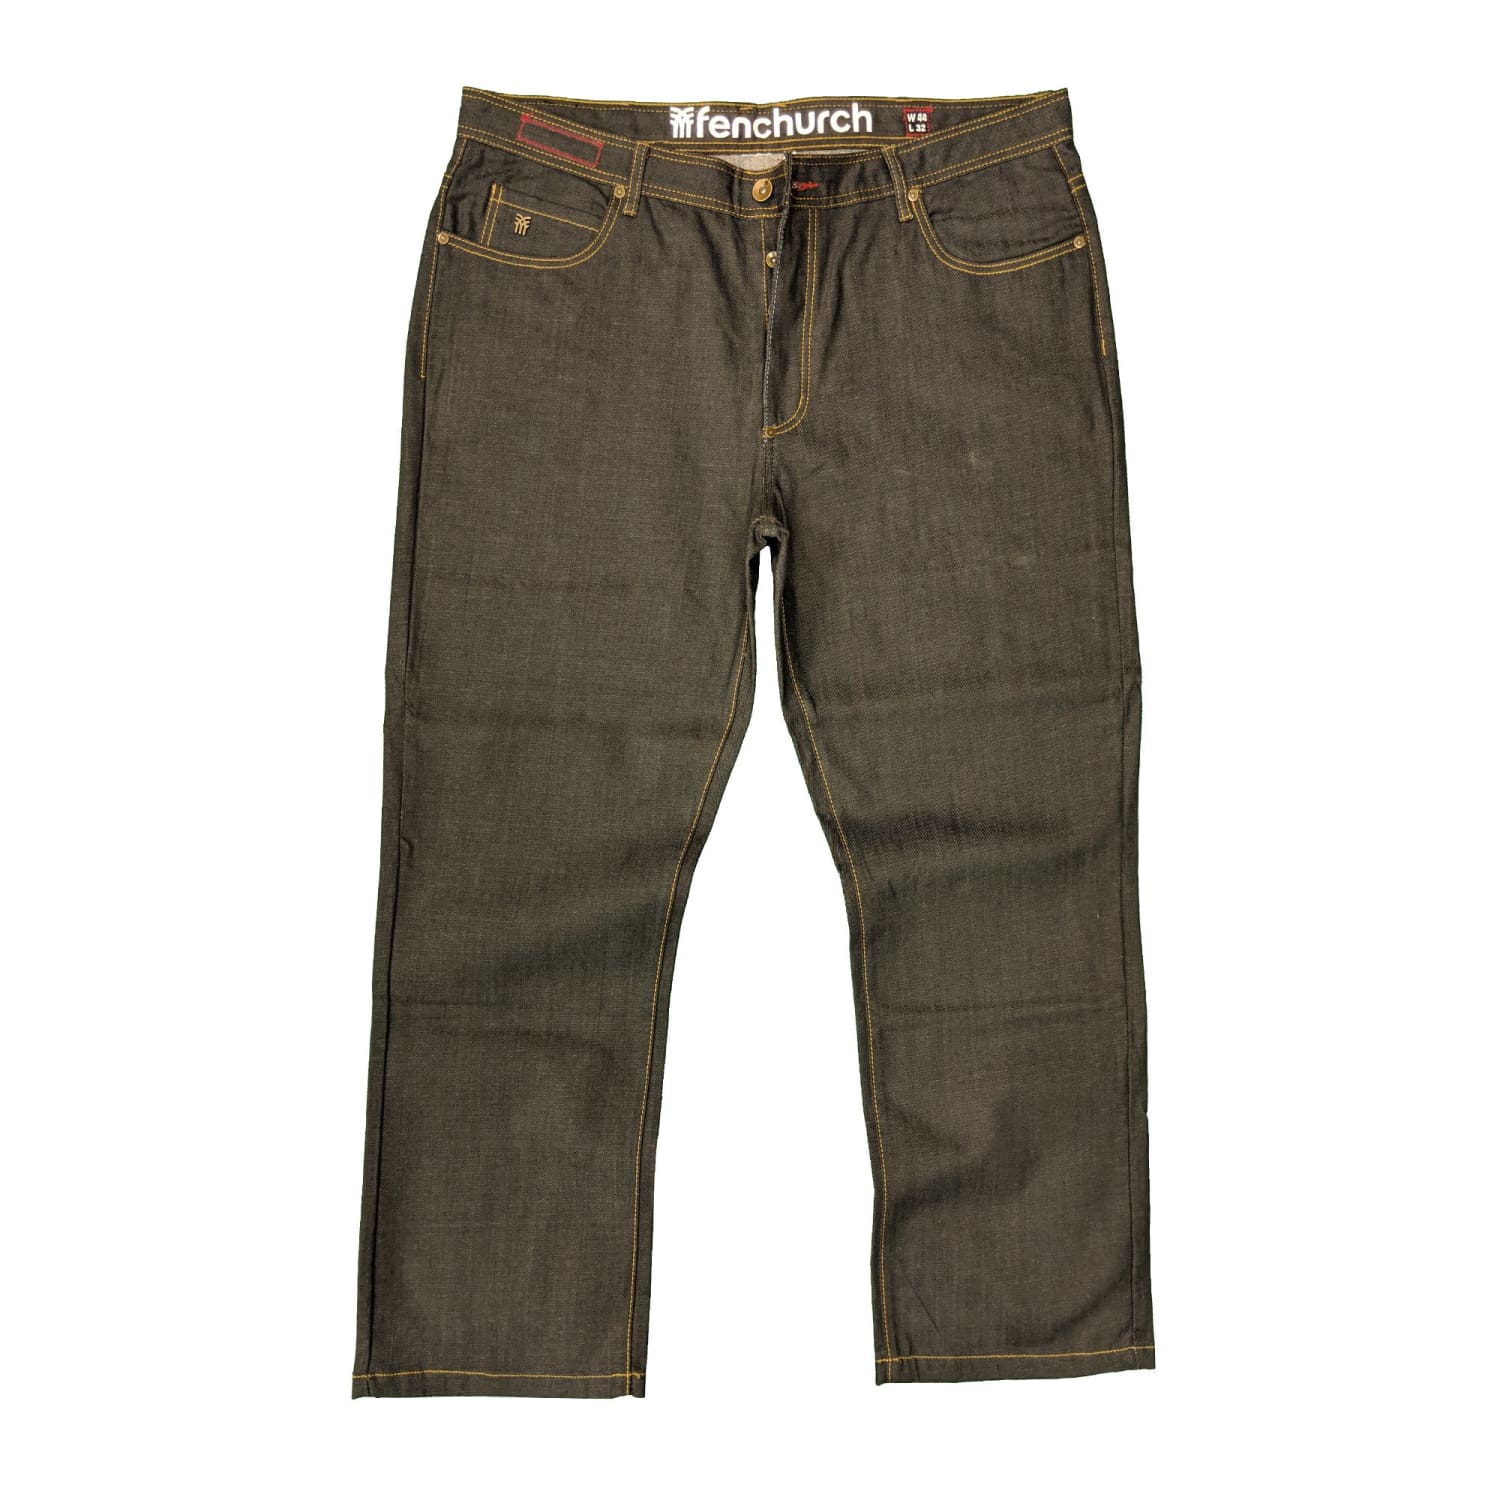 Fenchurch Jeans - KK116 - Raw - Charcoal 1